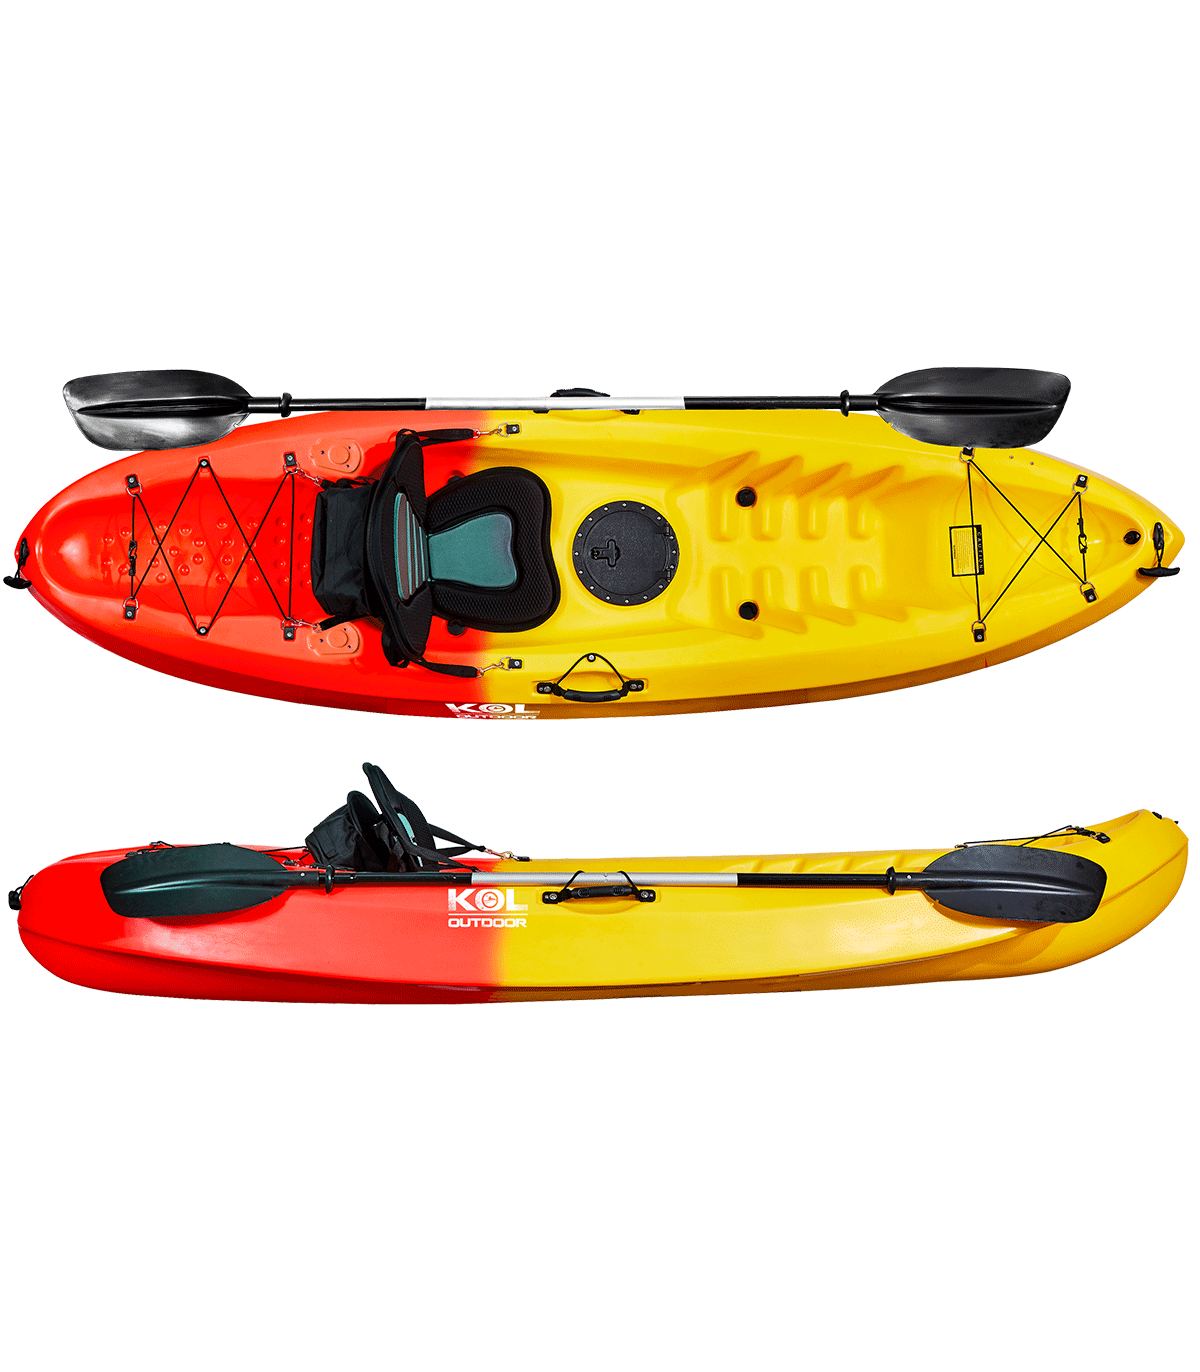 Kayak De Recreo Individual Kol Outdoor Mola (270x80 Cm) - rojo - 